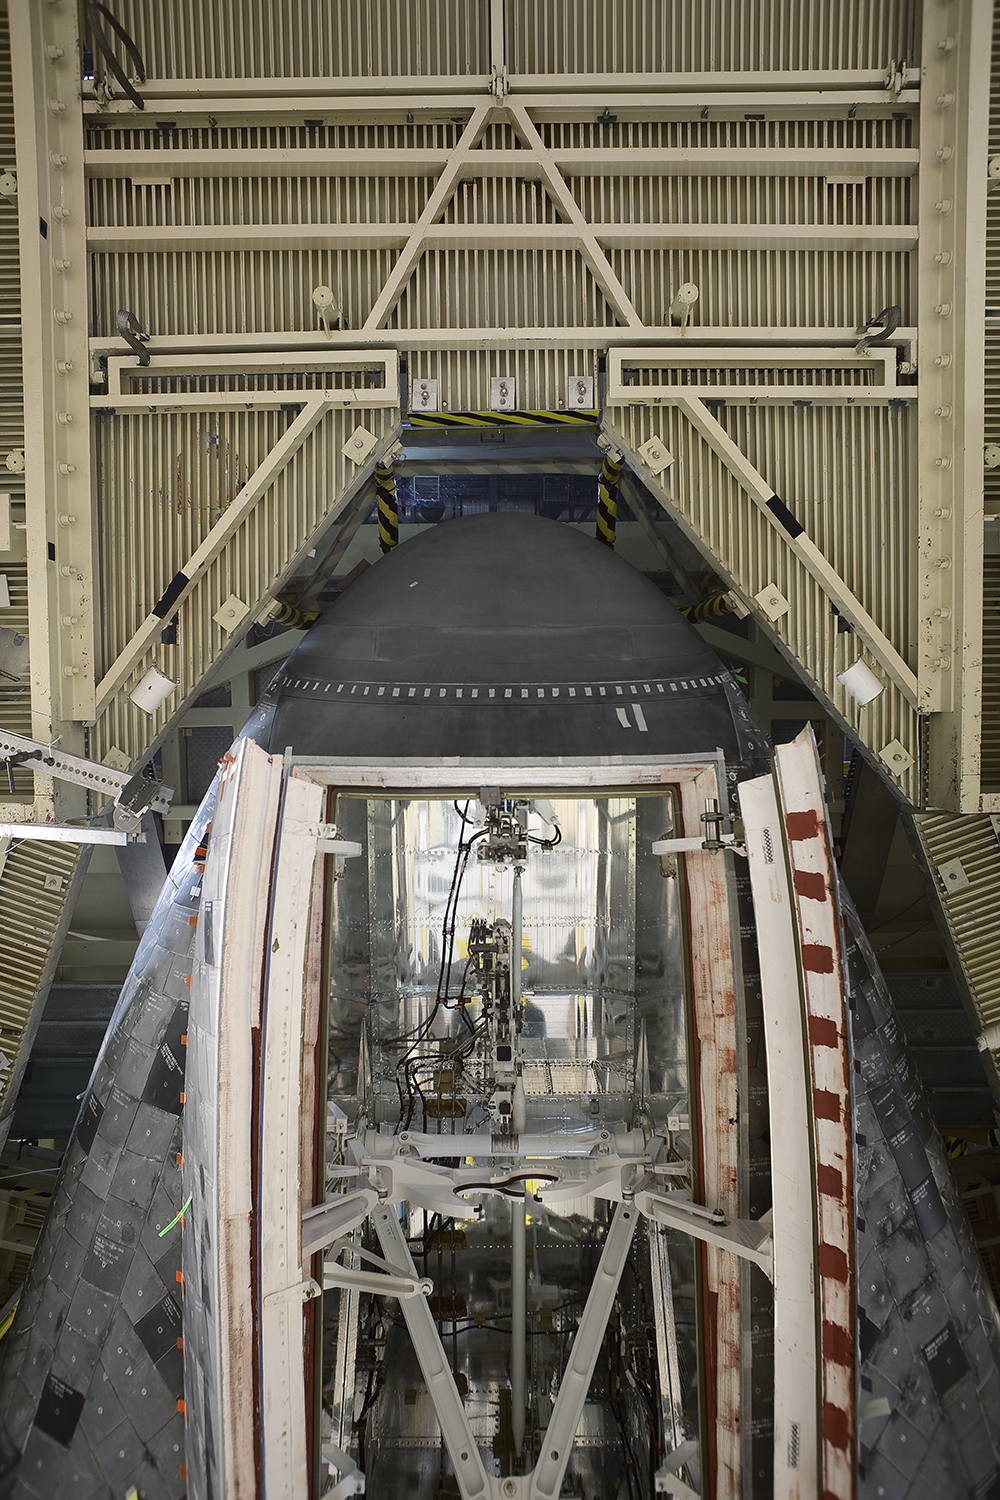 Nose Gear Doors and Platforms Space Shuttle Atlantis